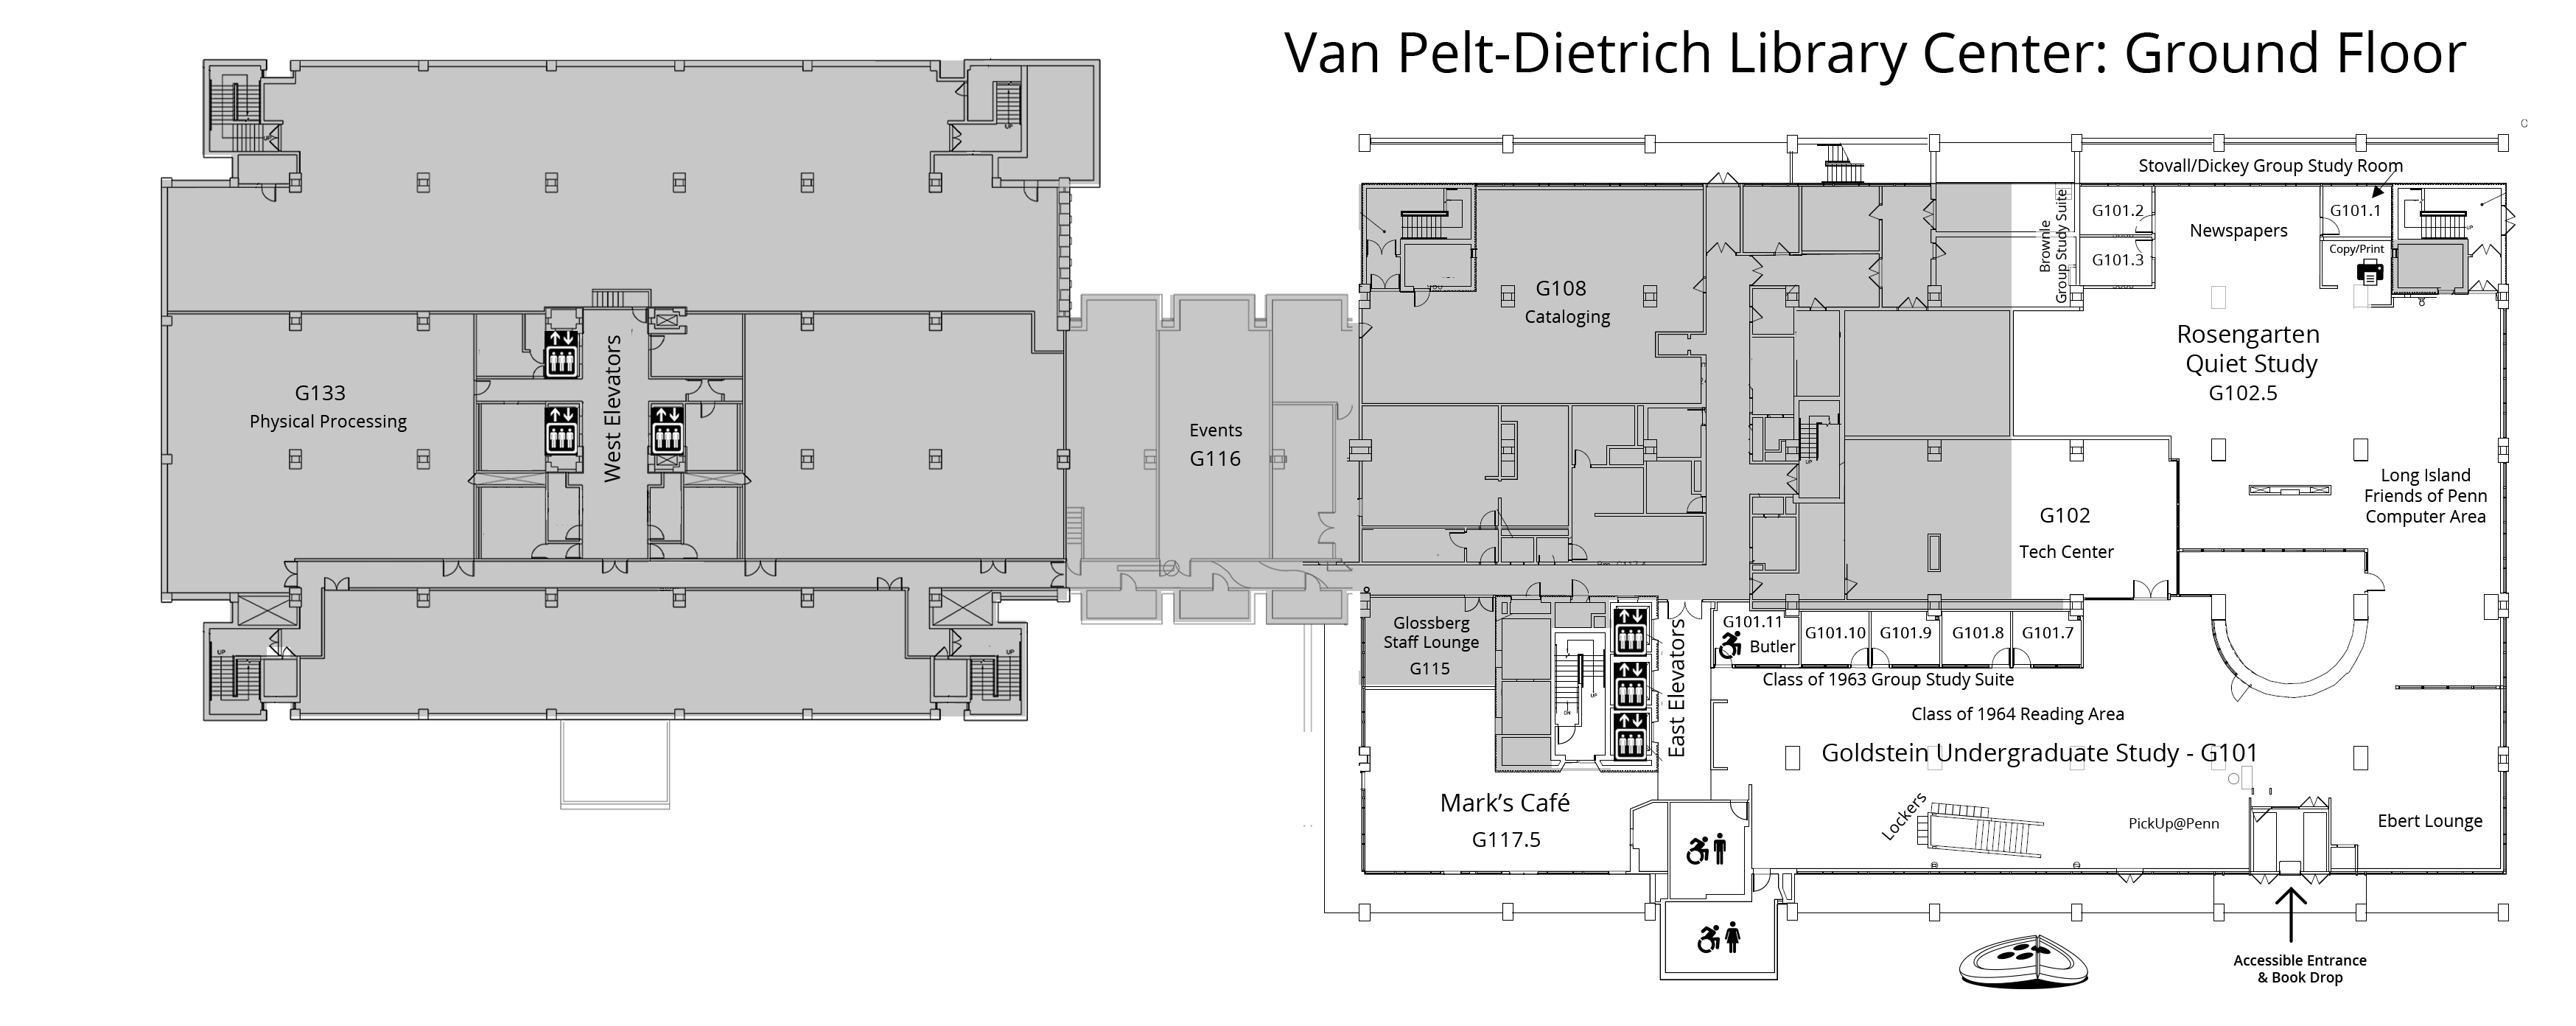 ground floor plan, Van Pelt-Dietrich Library Center. Full description is below.